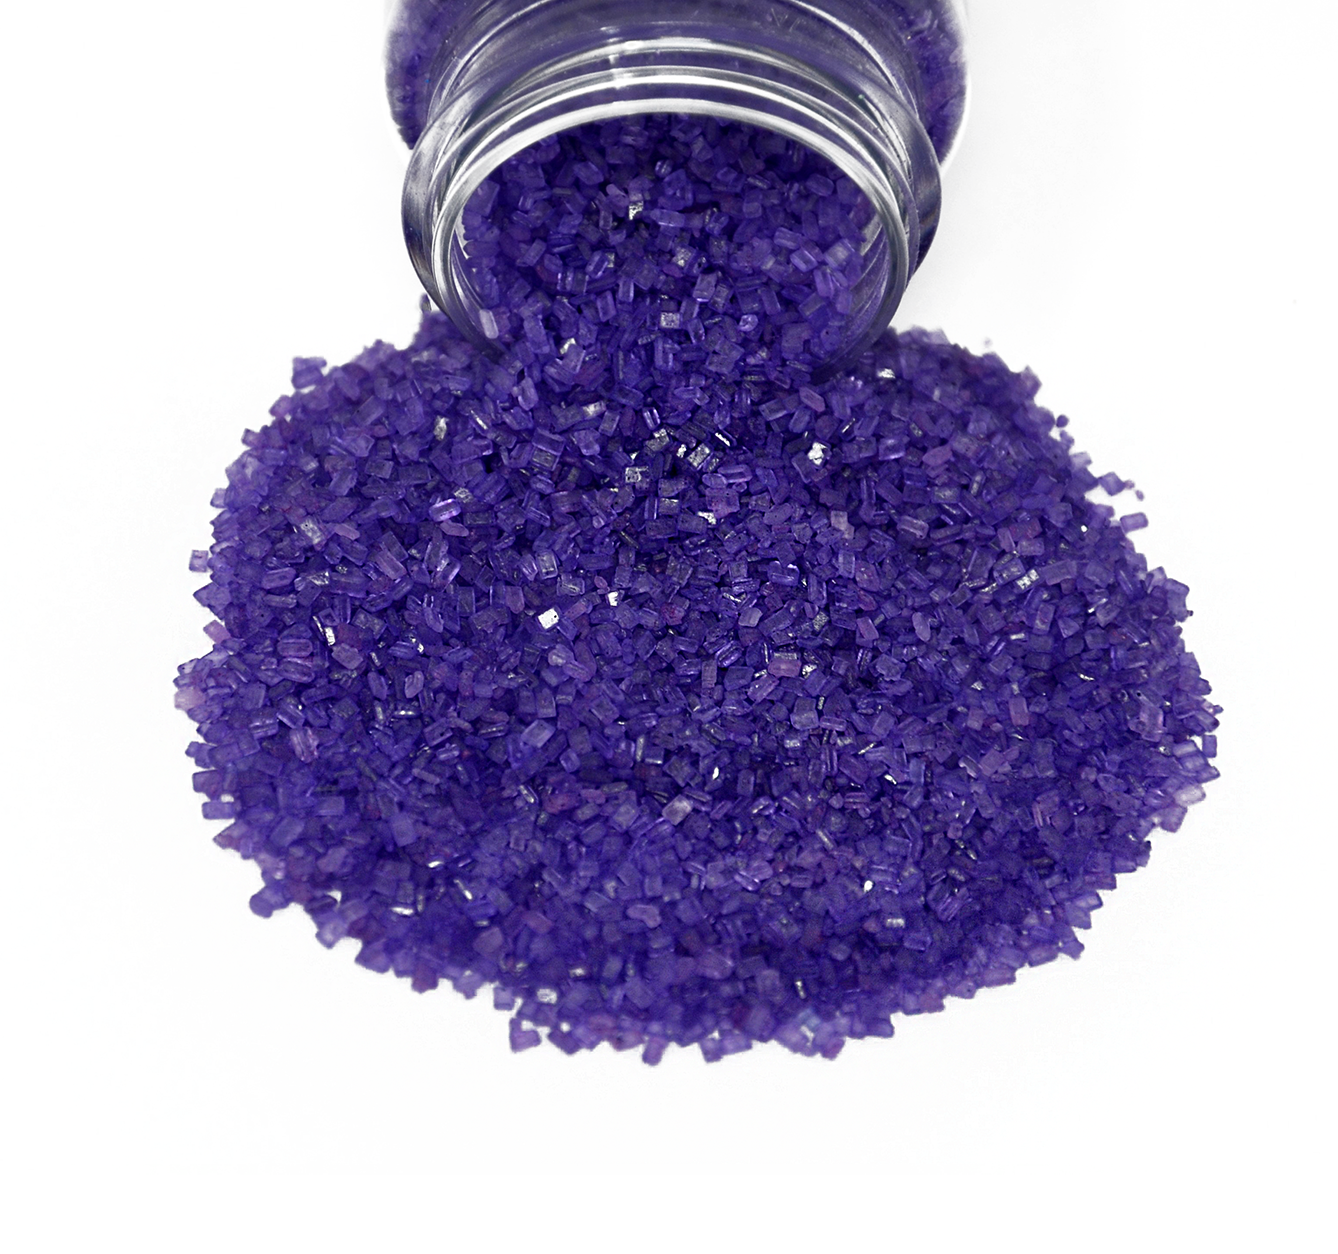 Load image into Gallery viewer, Amethyst - Purple Sugar Crystals 4.2oz Bottle
